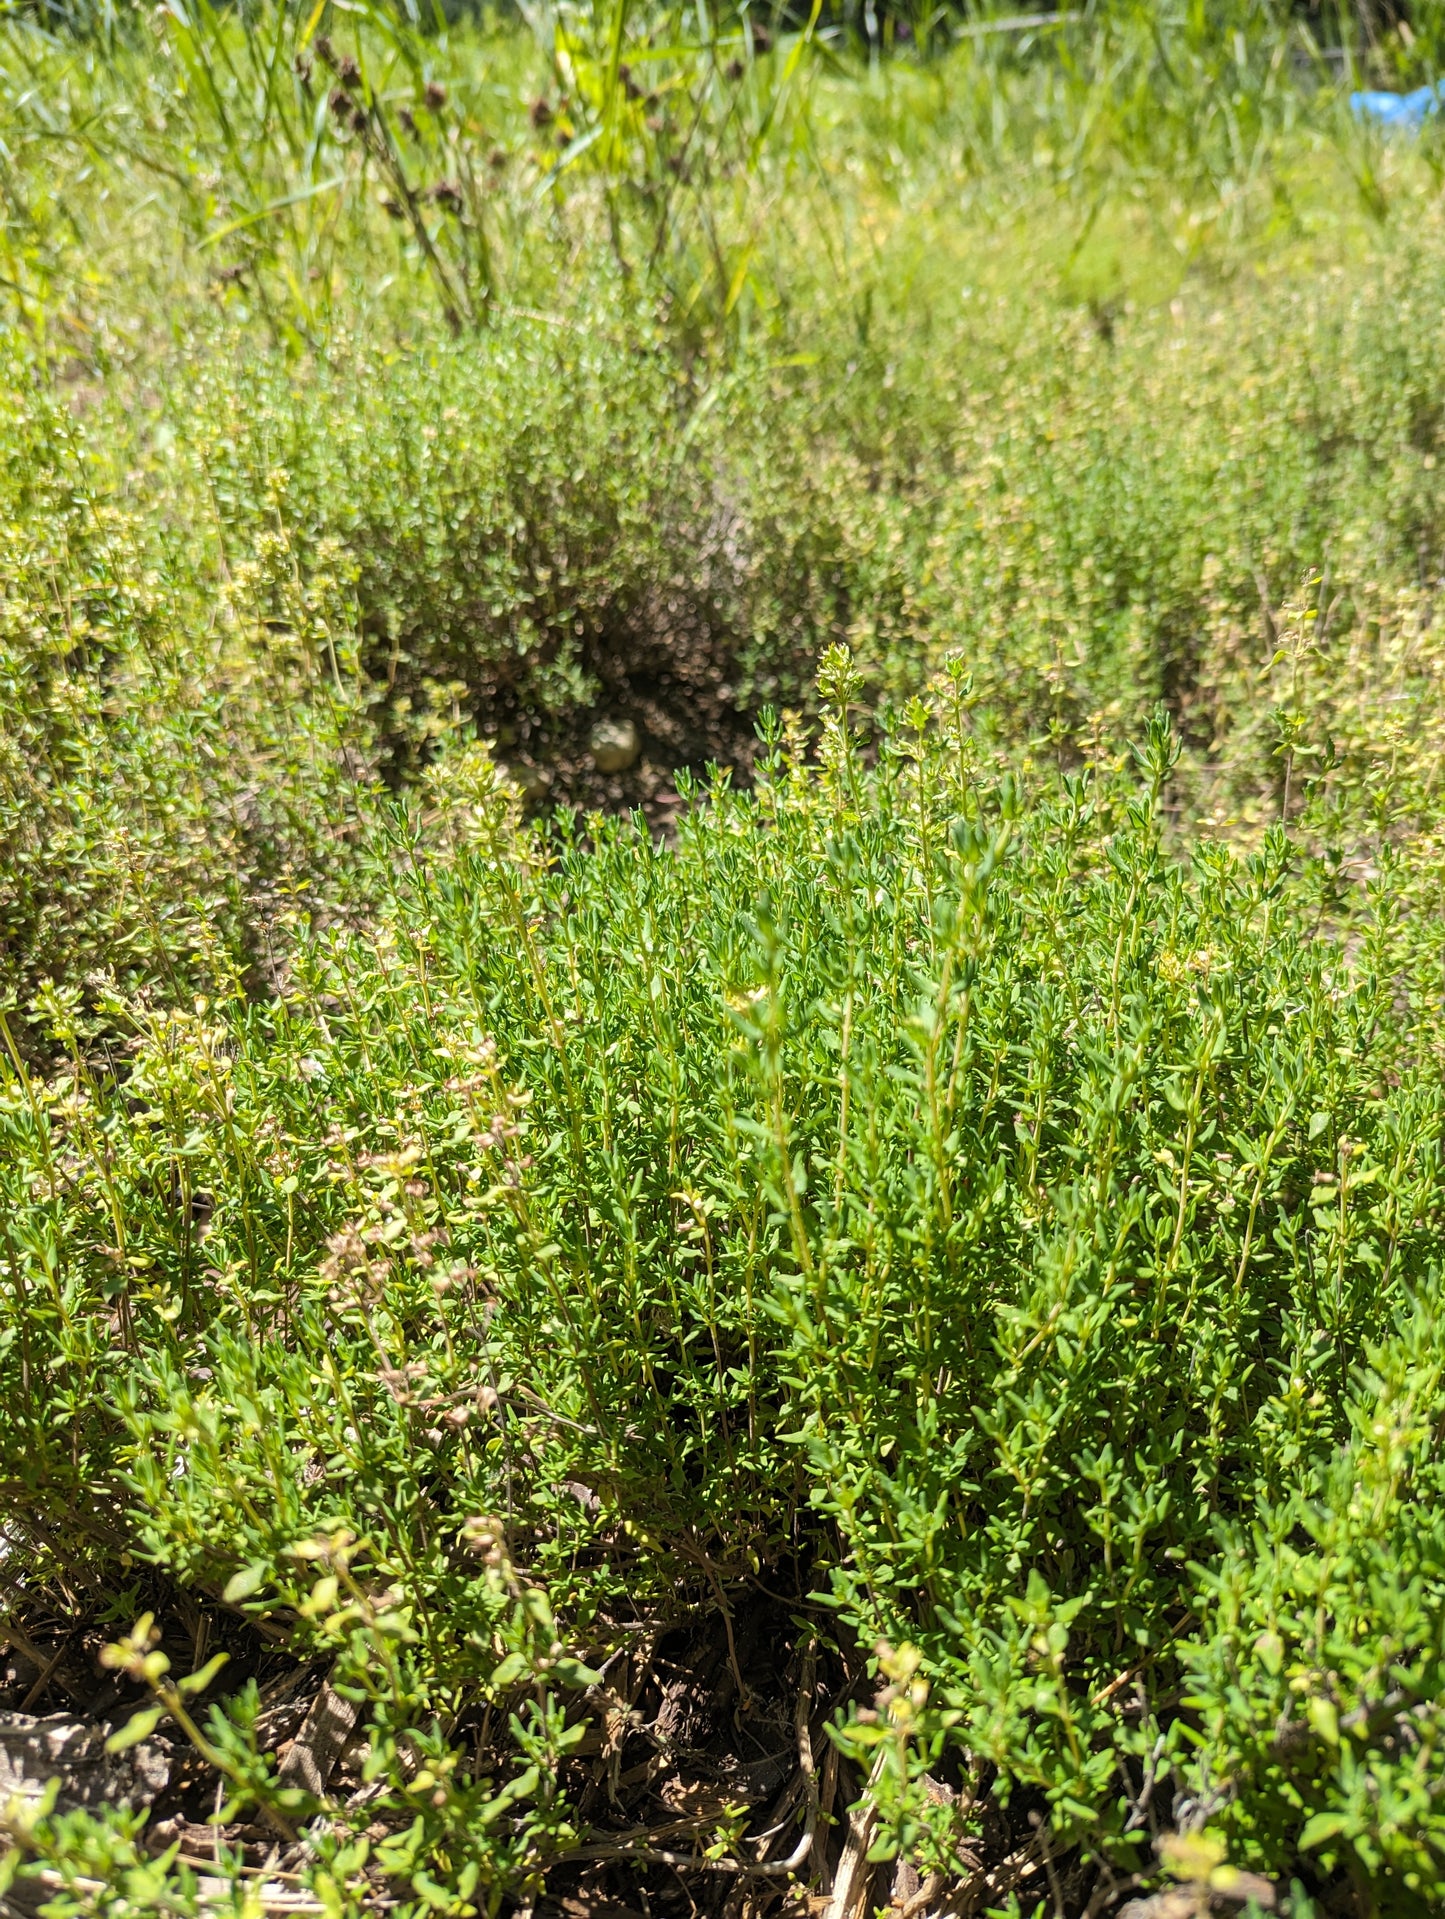 Organic Thyme, Thymus vulgaris, Sustainable Farm Grown Herb Medicine